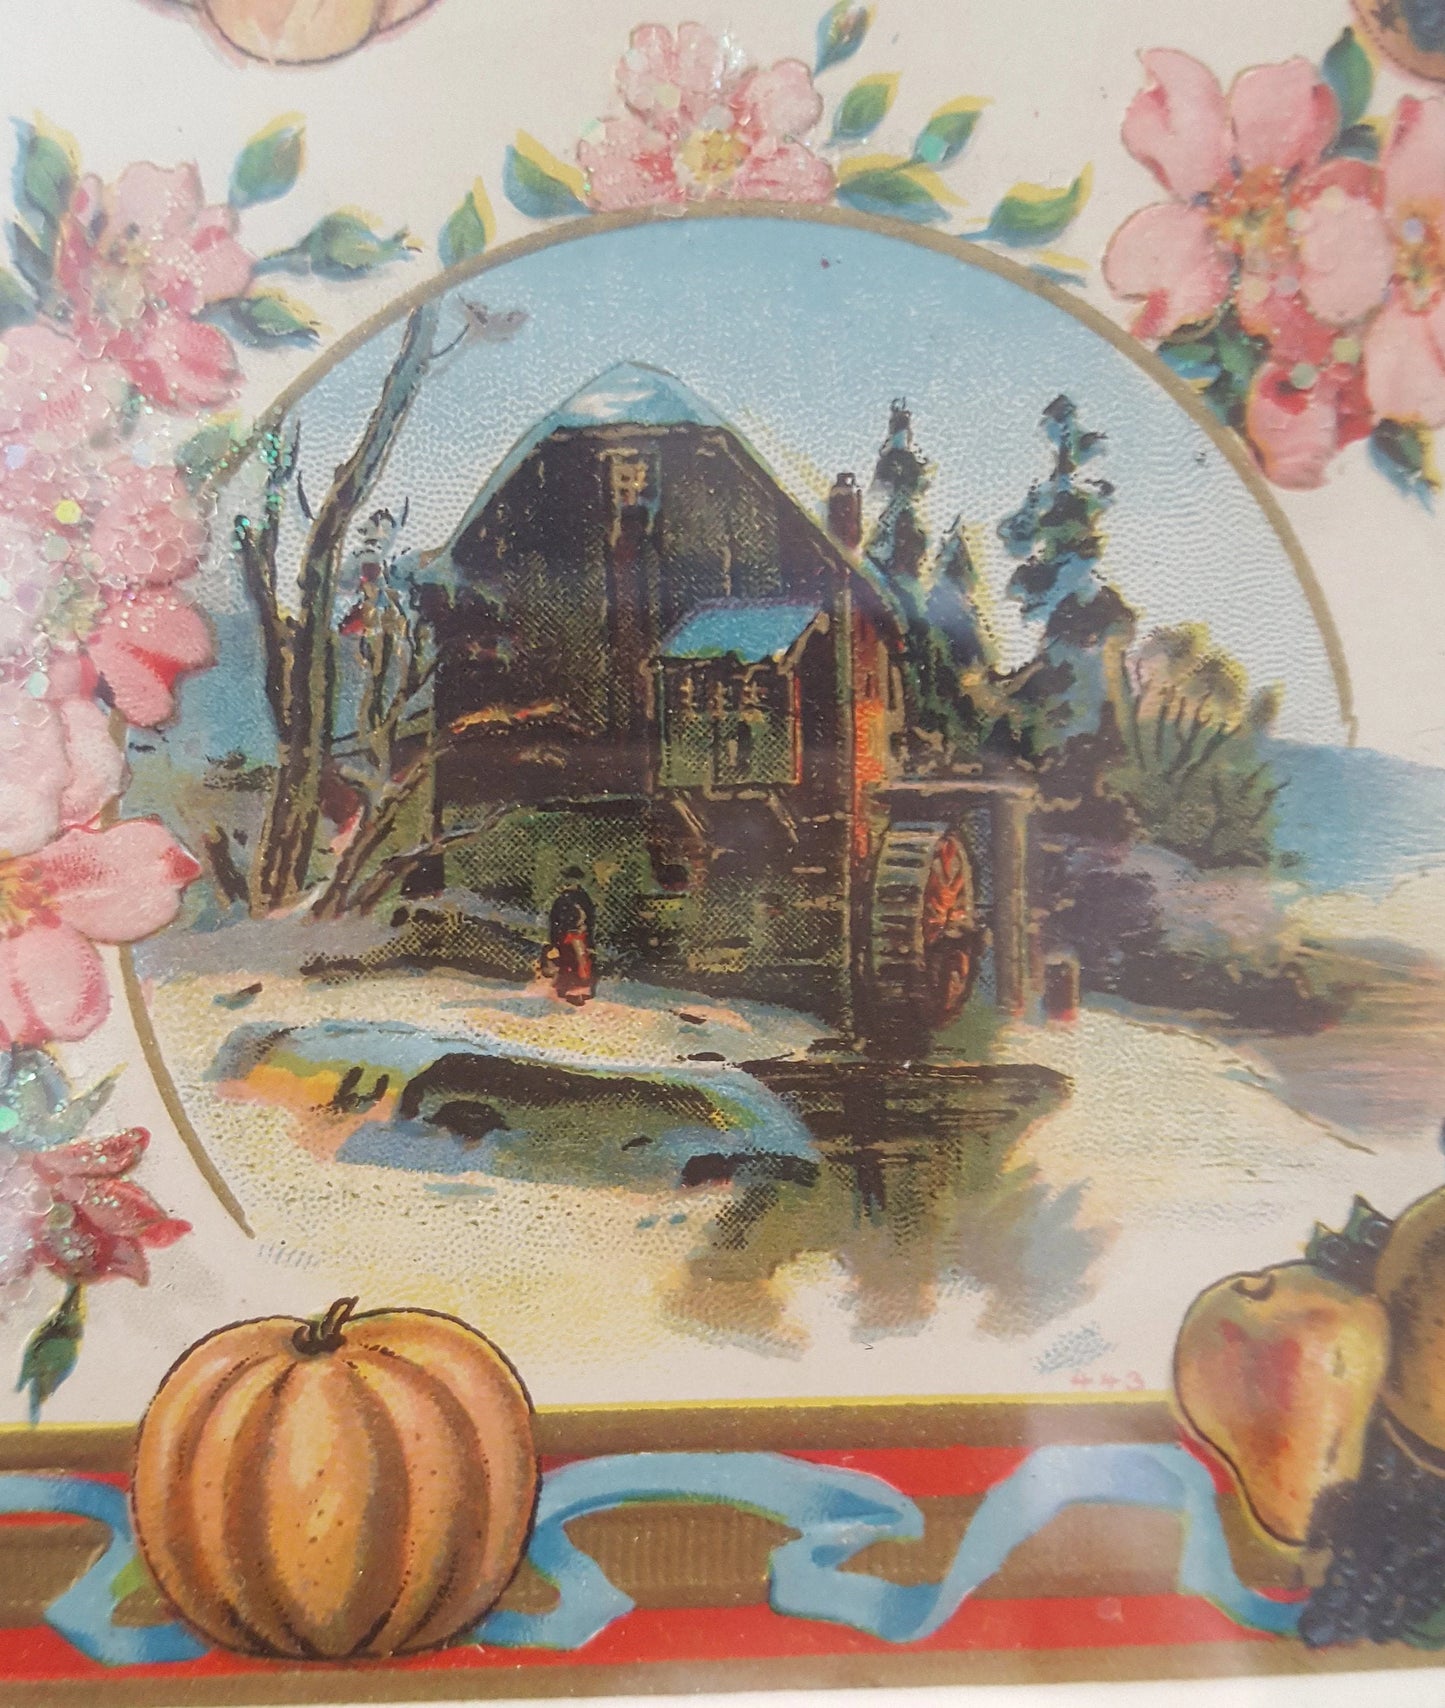 1907 Vintage Framed Thanksgiving Greetings Card